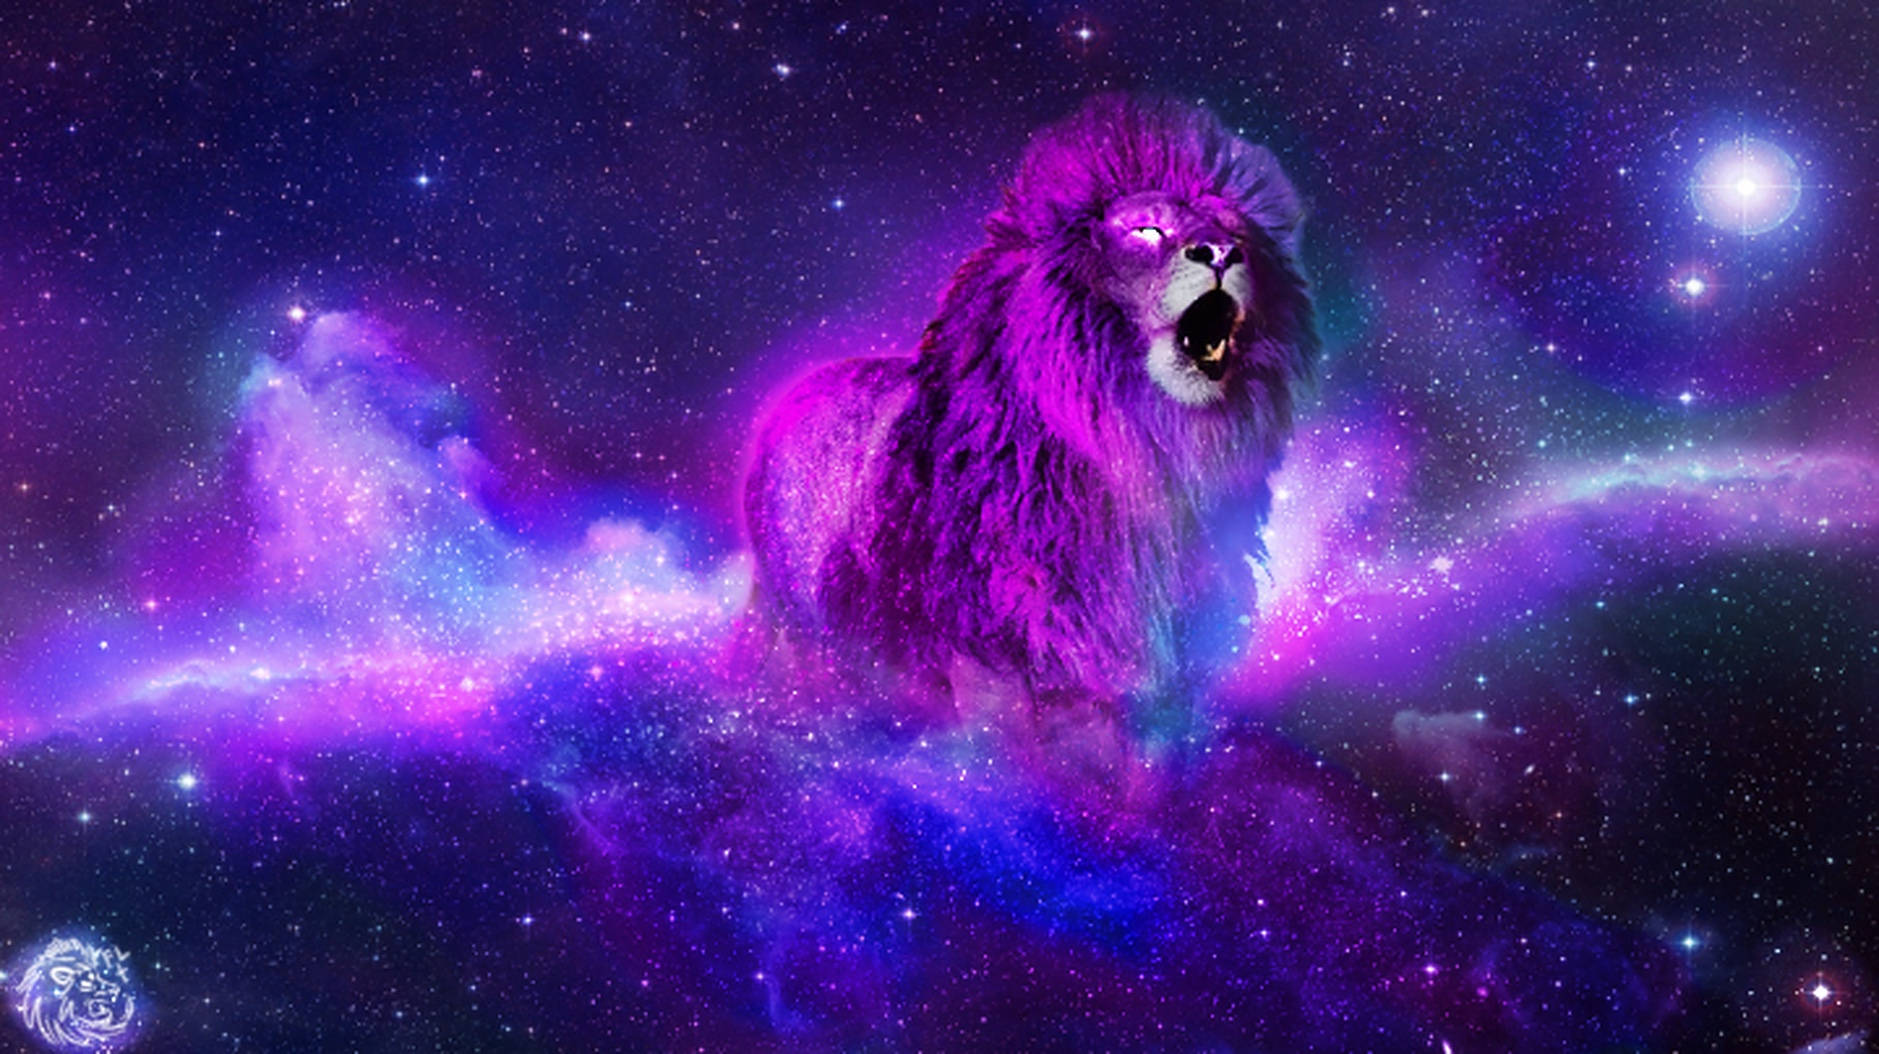 Majestic Galaxy Lion Roaring In The Universe Wallpaper